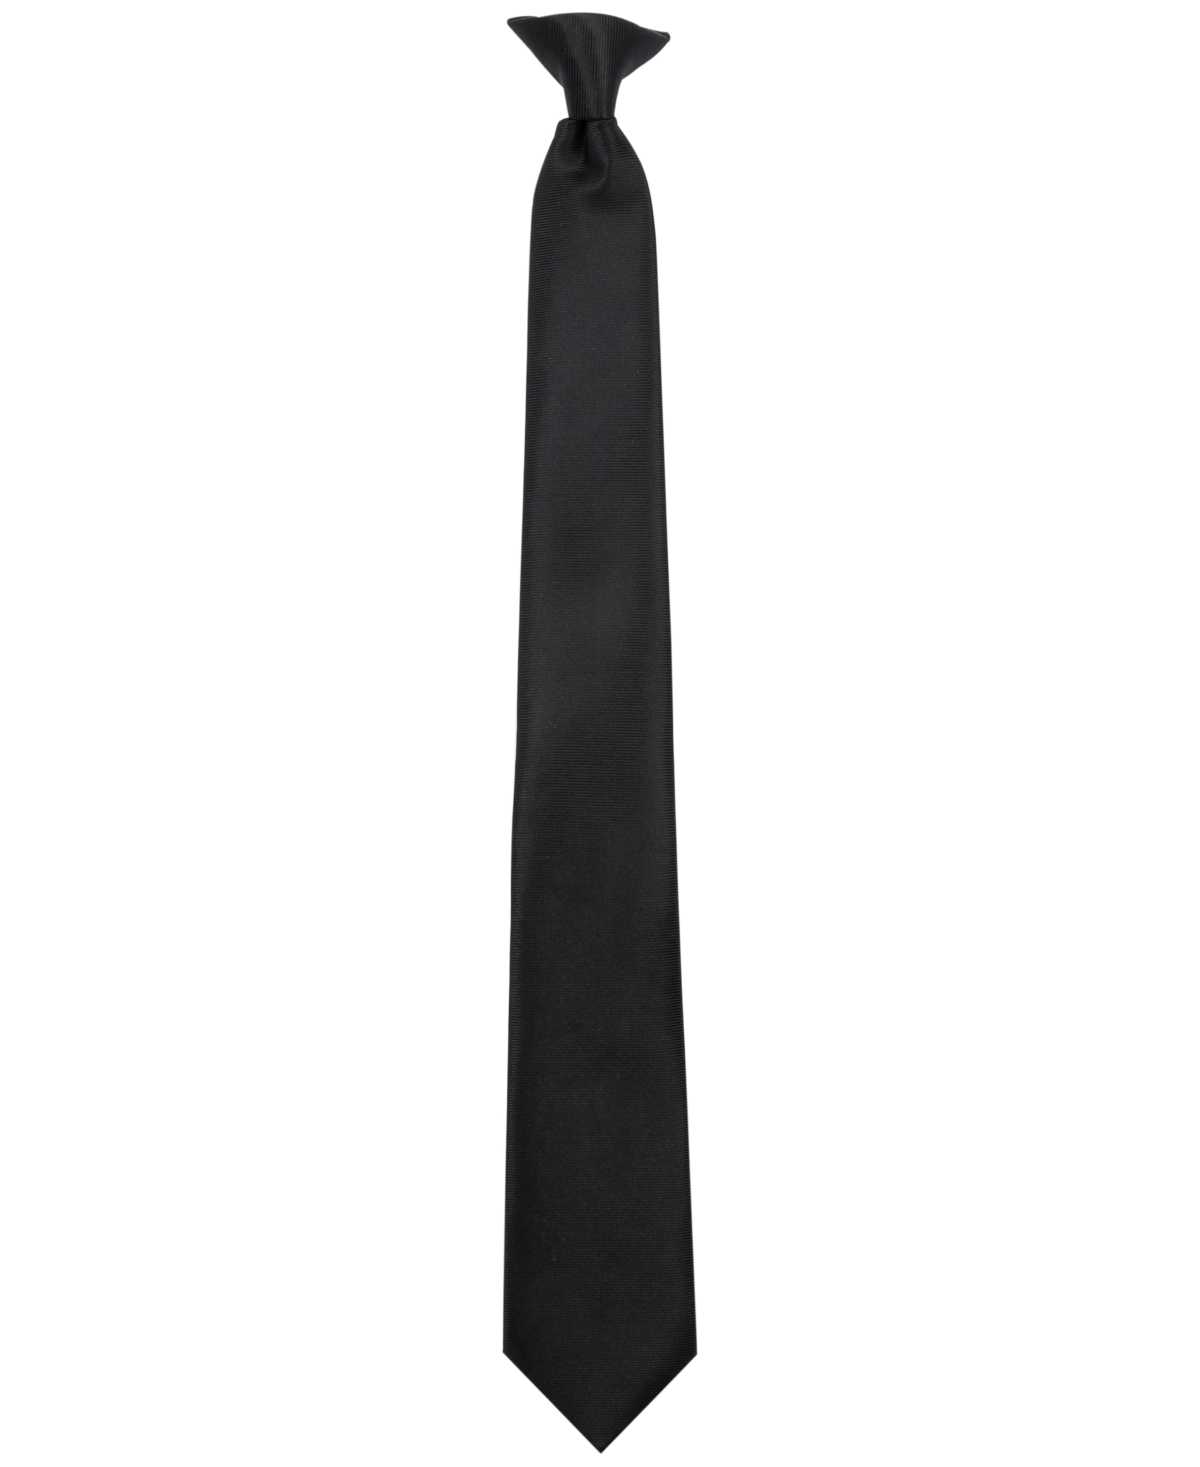 Calabrum Men's Slim Solid Black Clip-on Tie